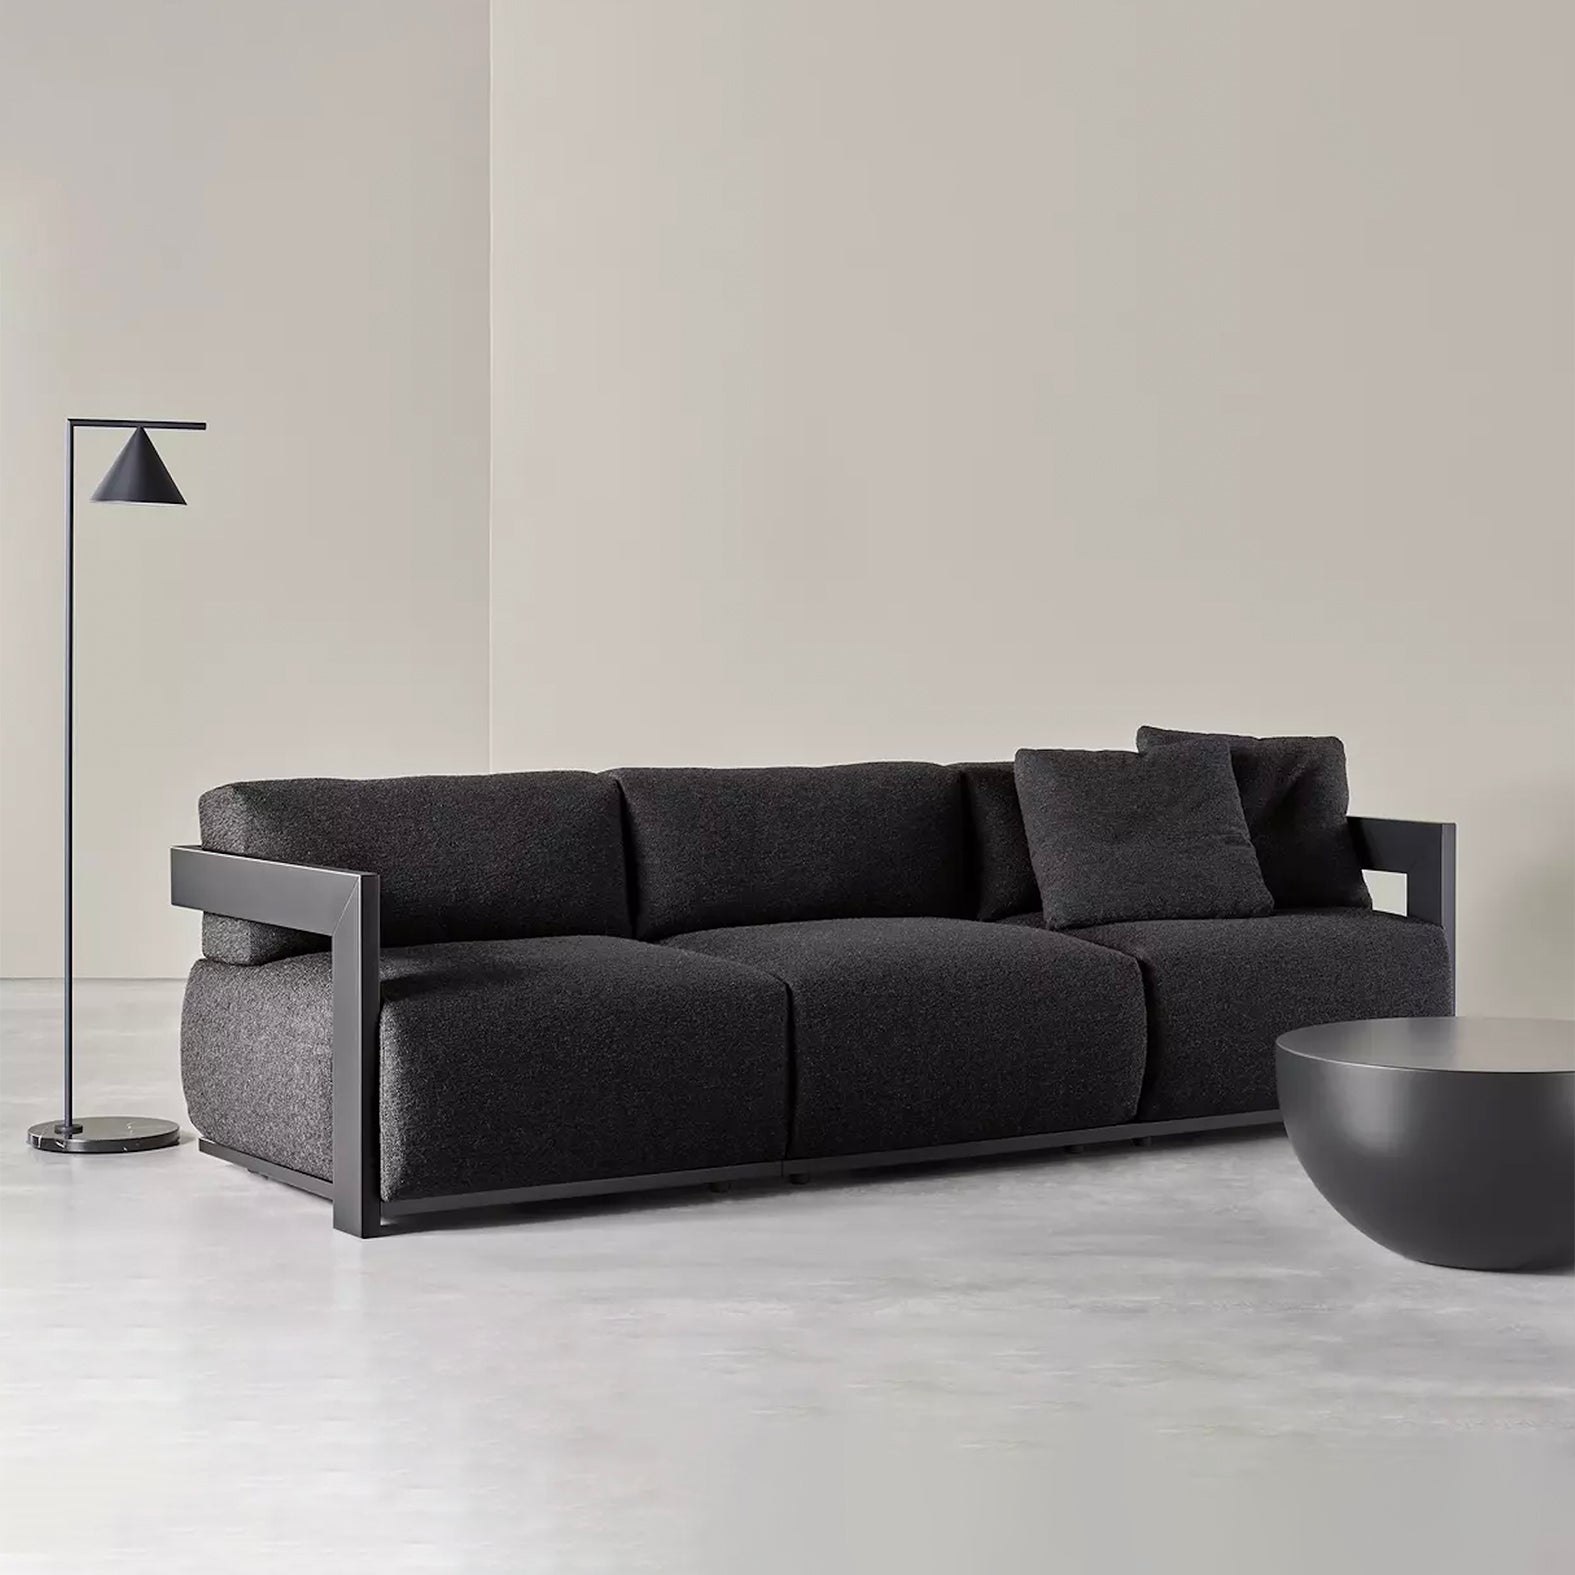 Claud Open Air Modular Sofa